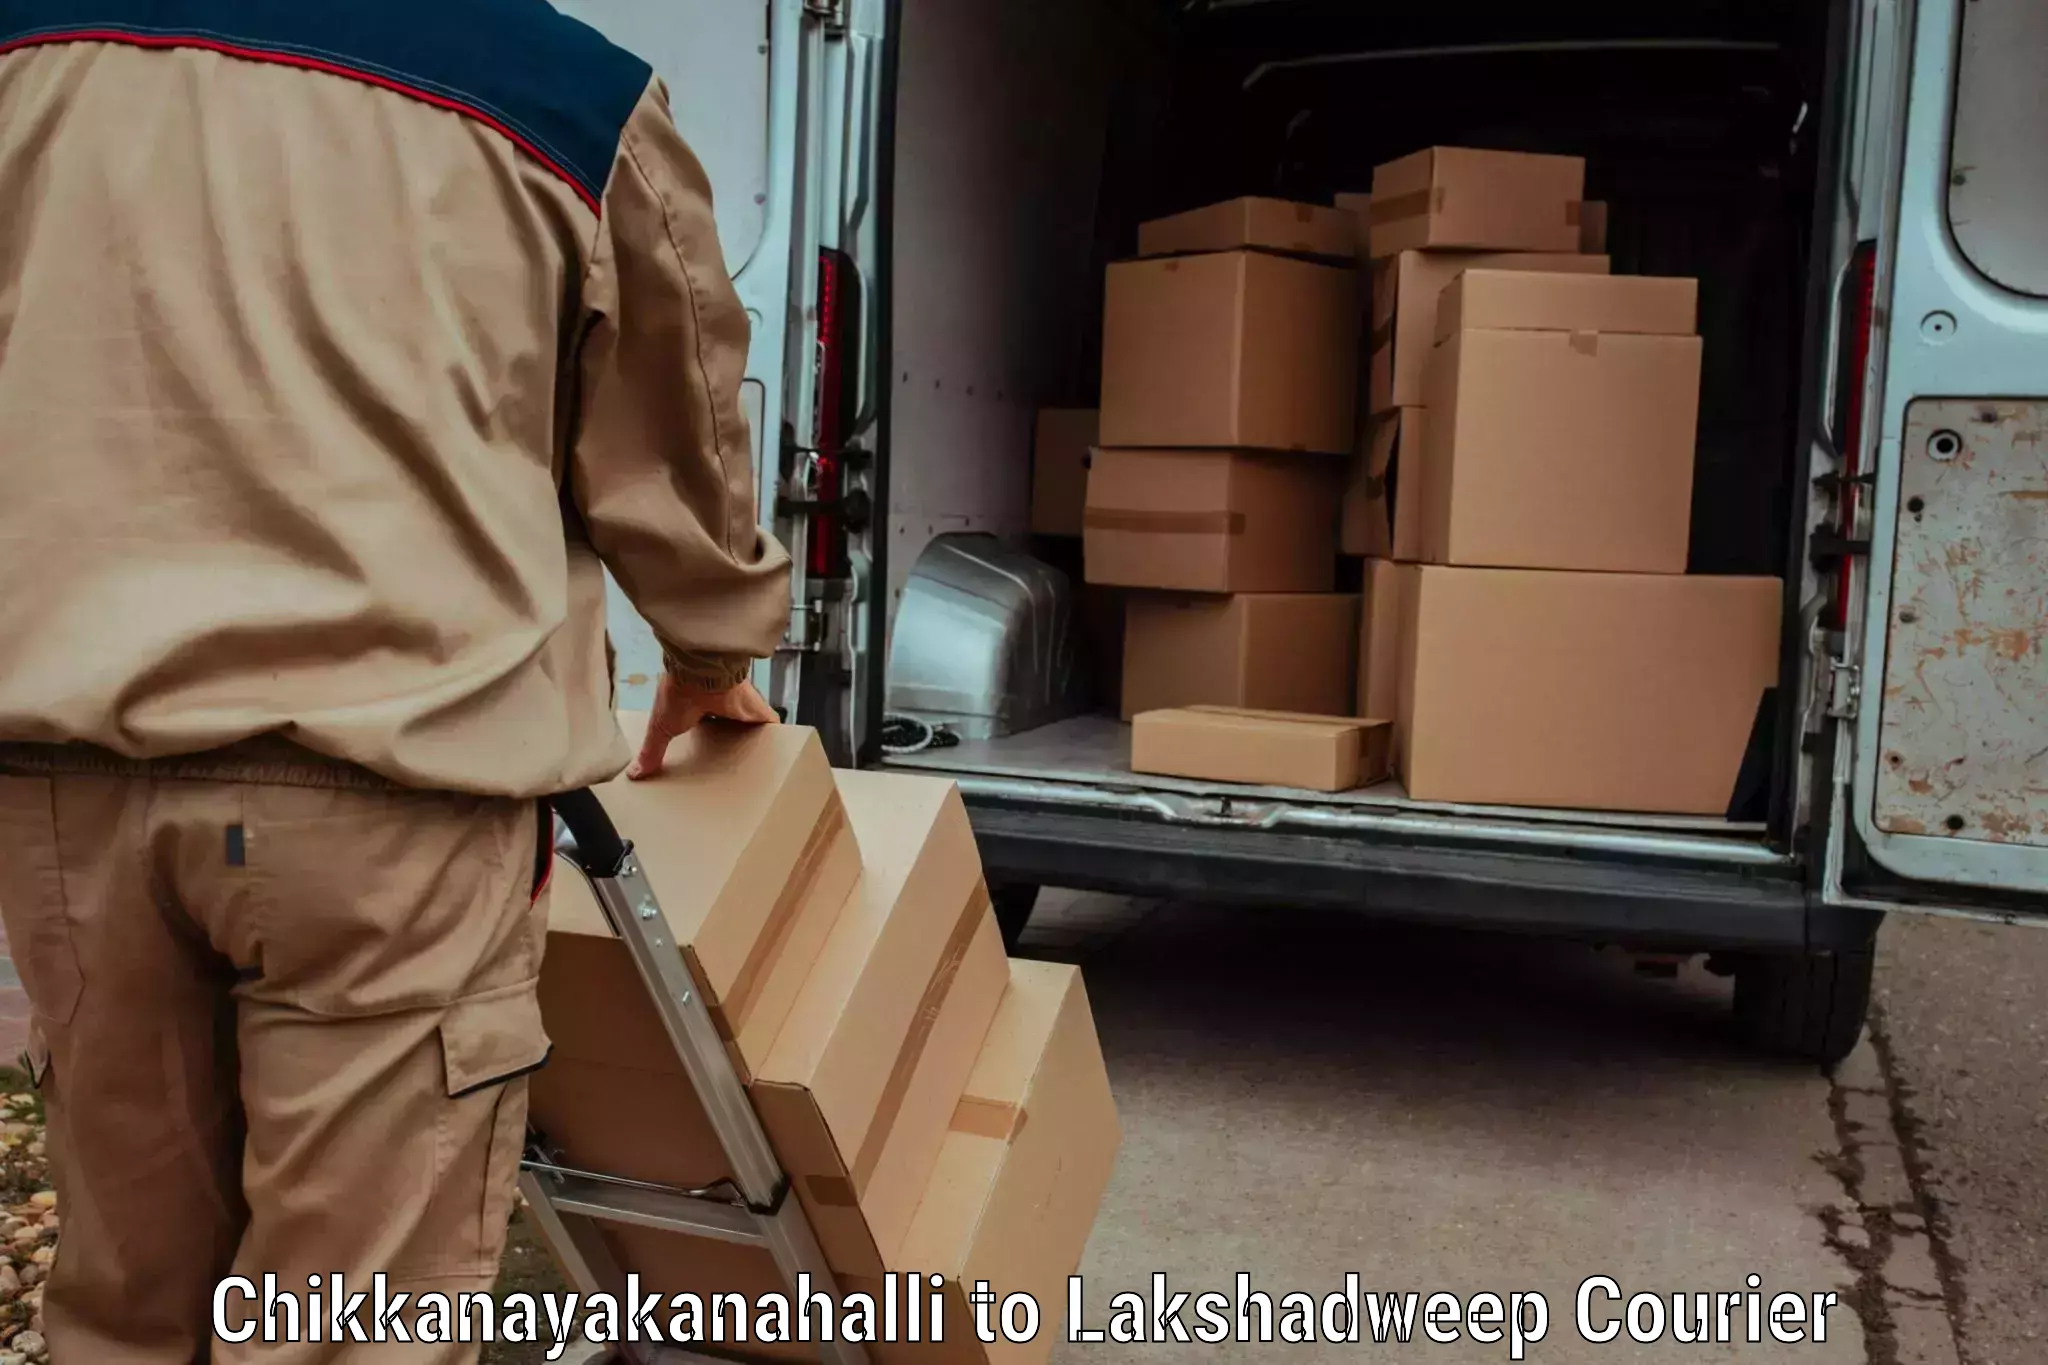 Reliable courier service Chikkanayakanahalli to Lakshadweep